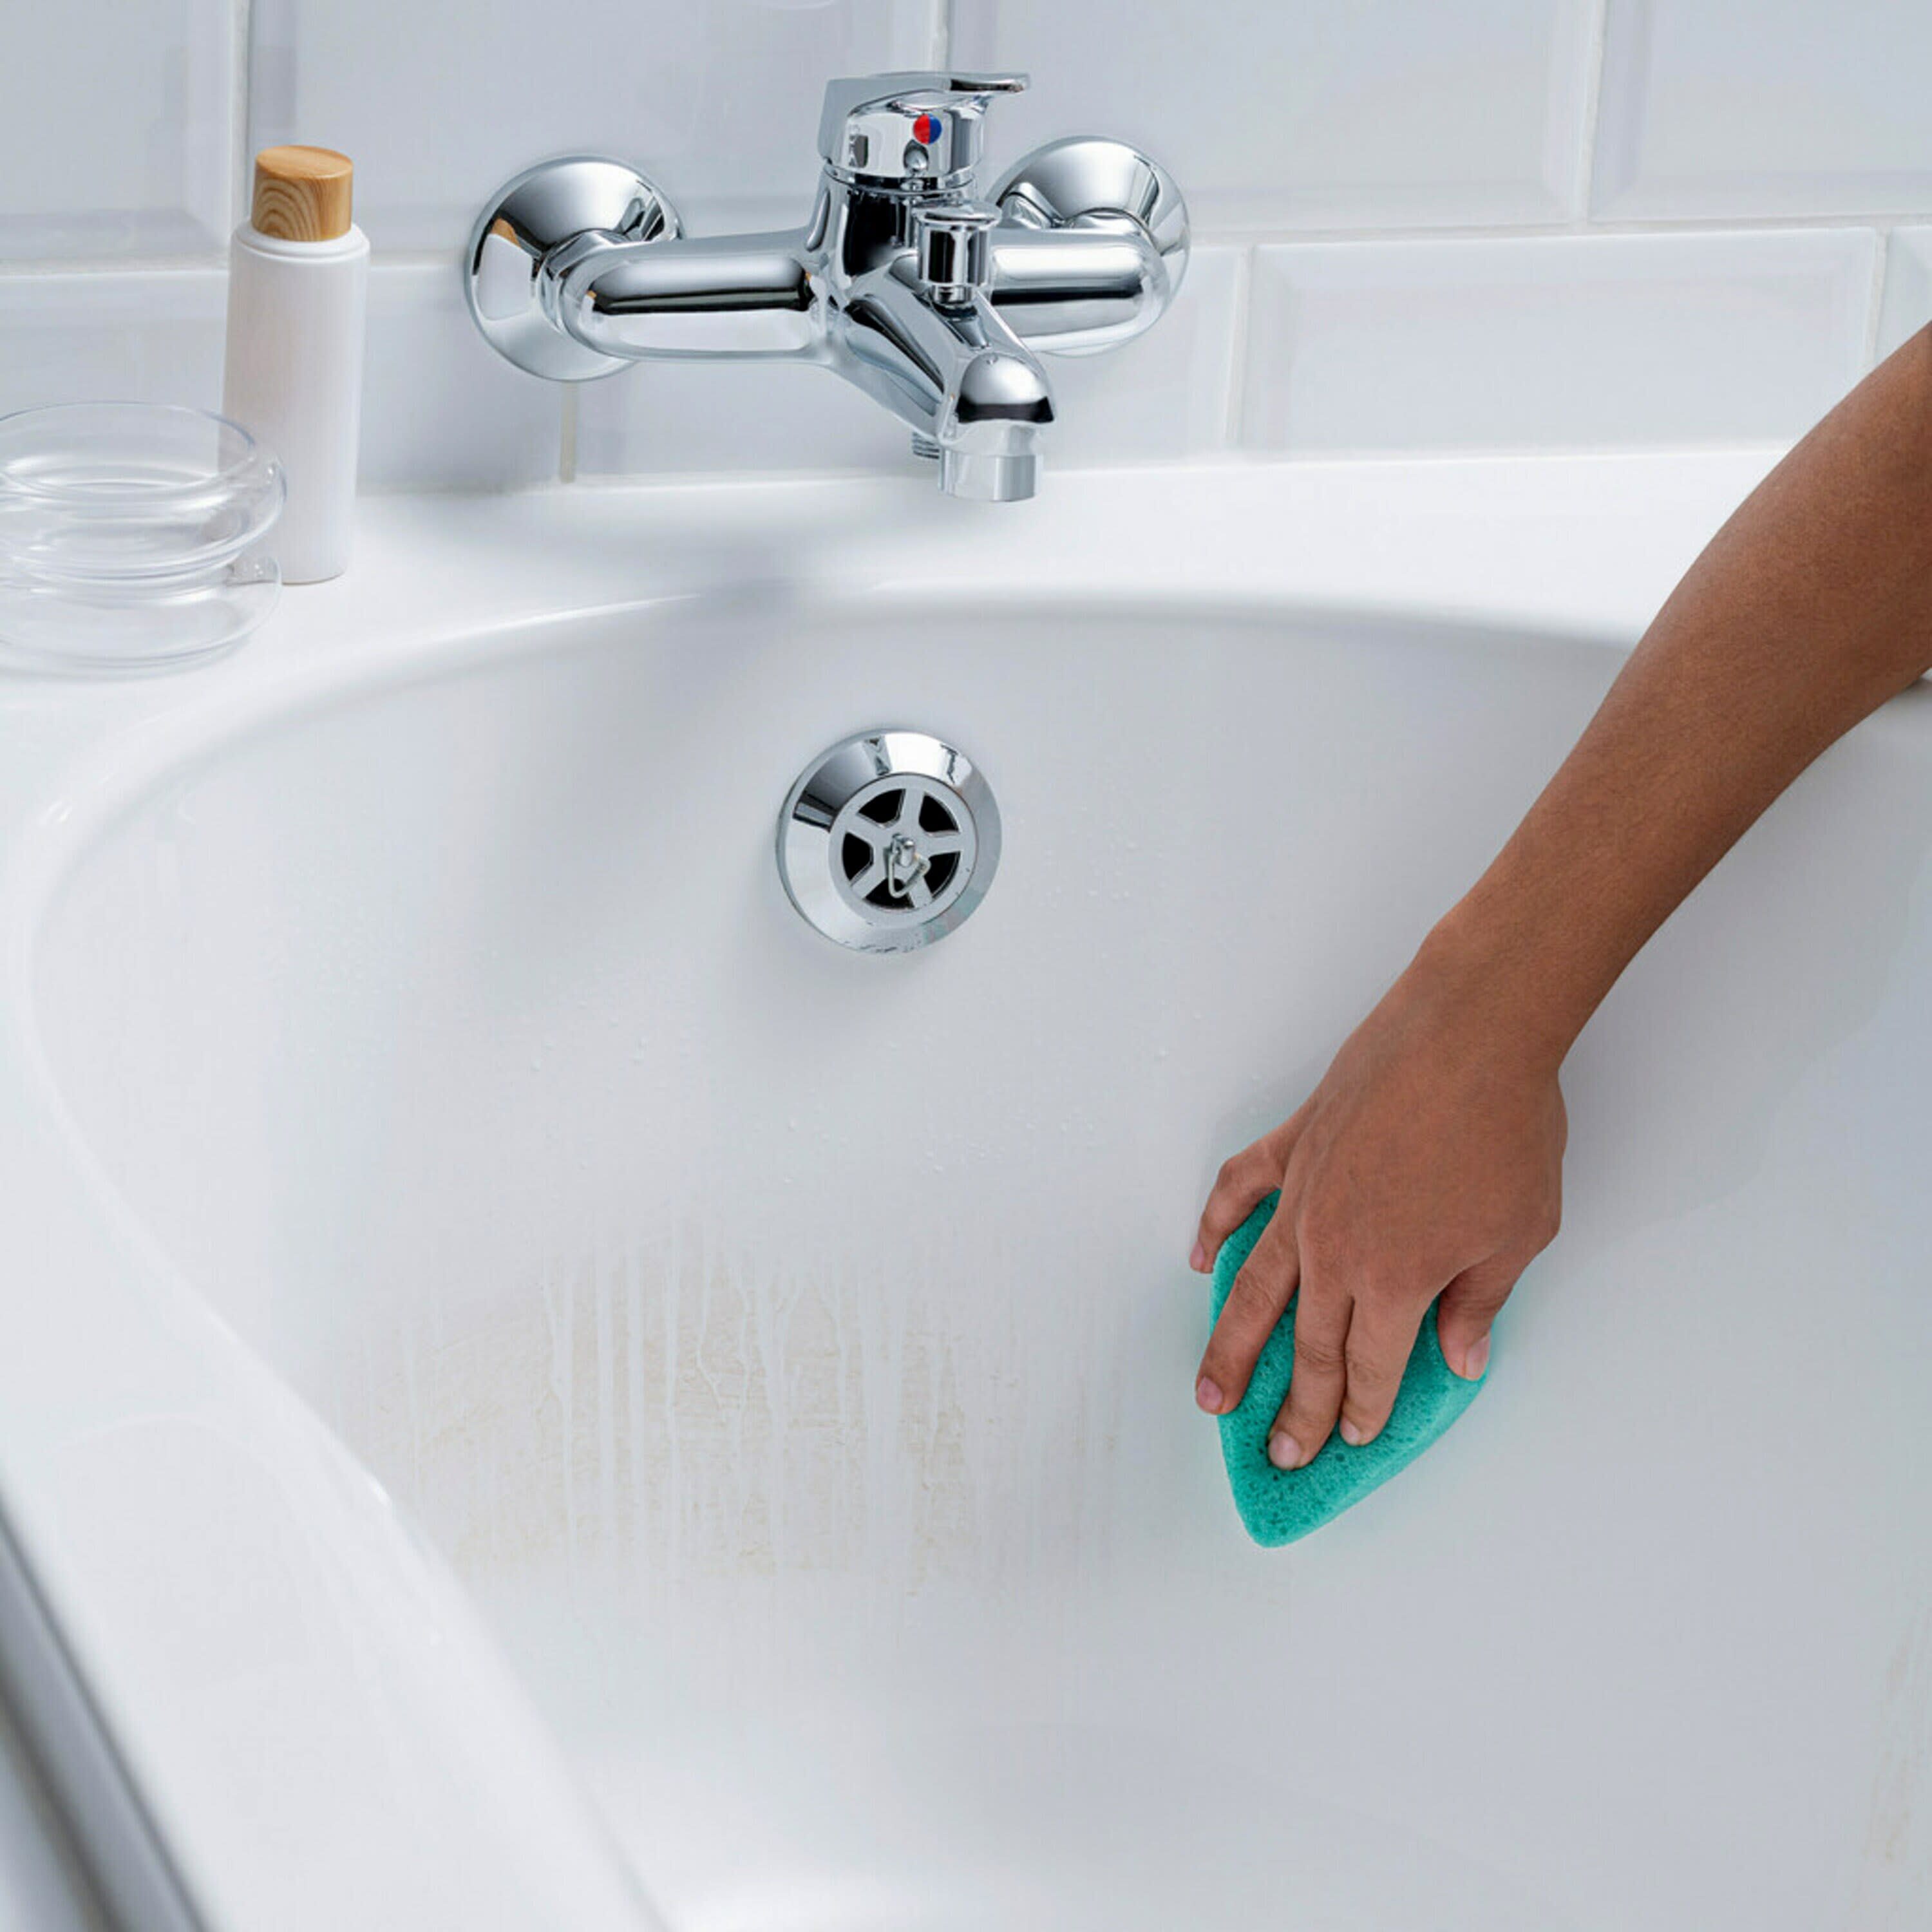 2 In 1 Bathroom Cleaning Brush – homettd